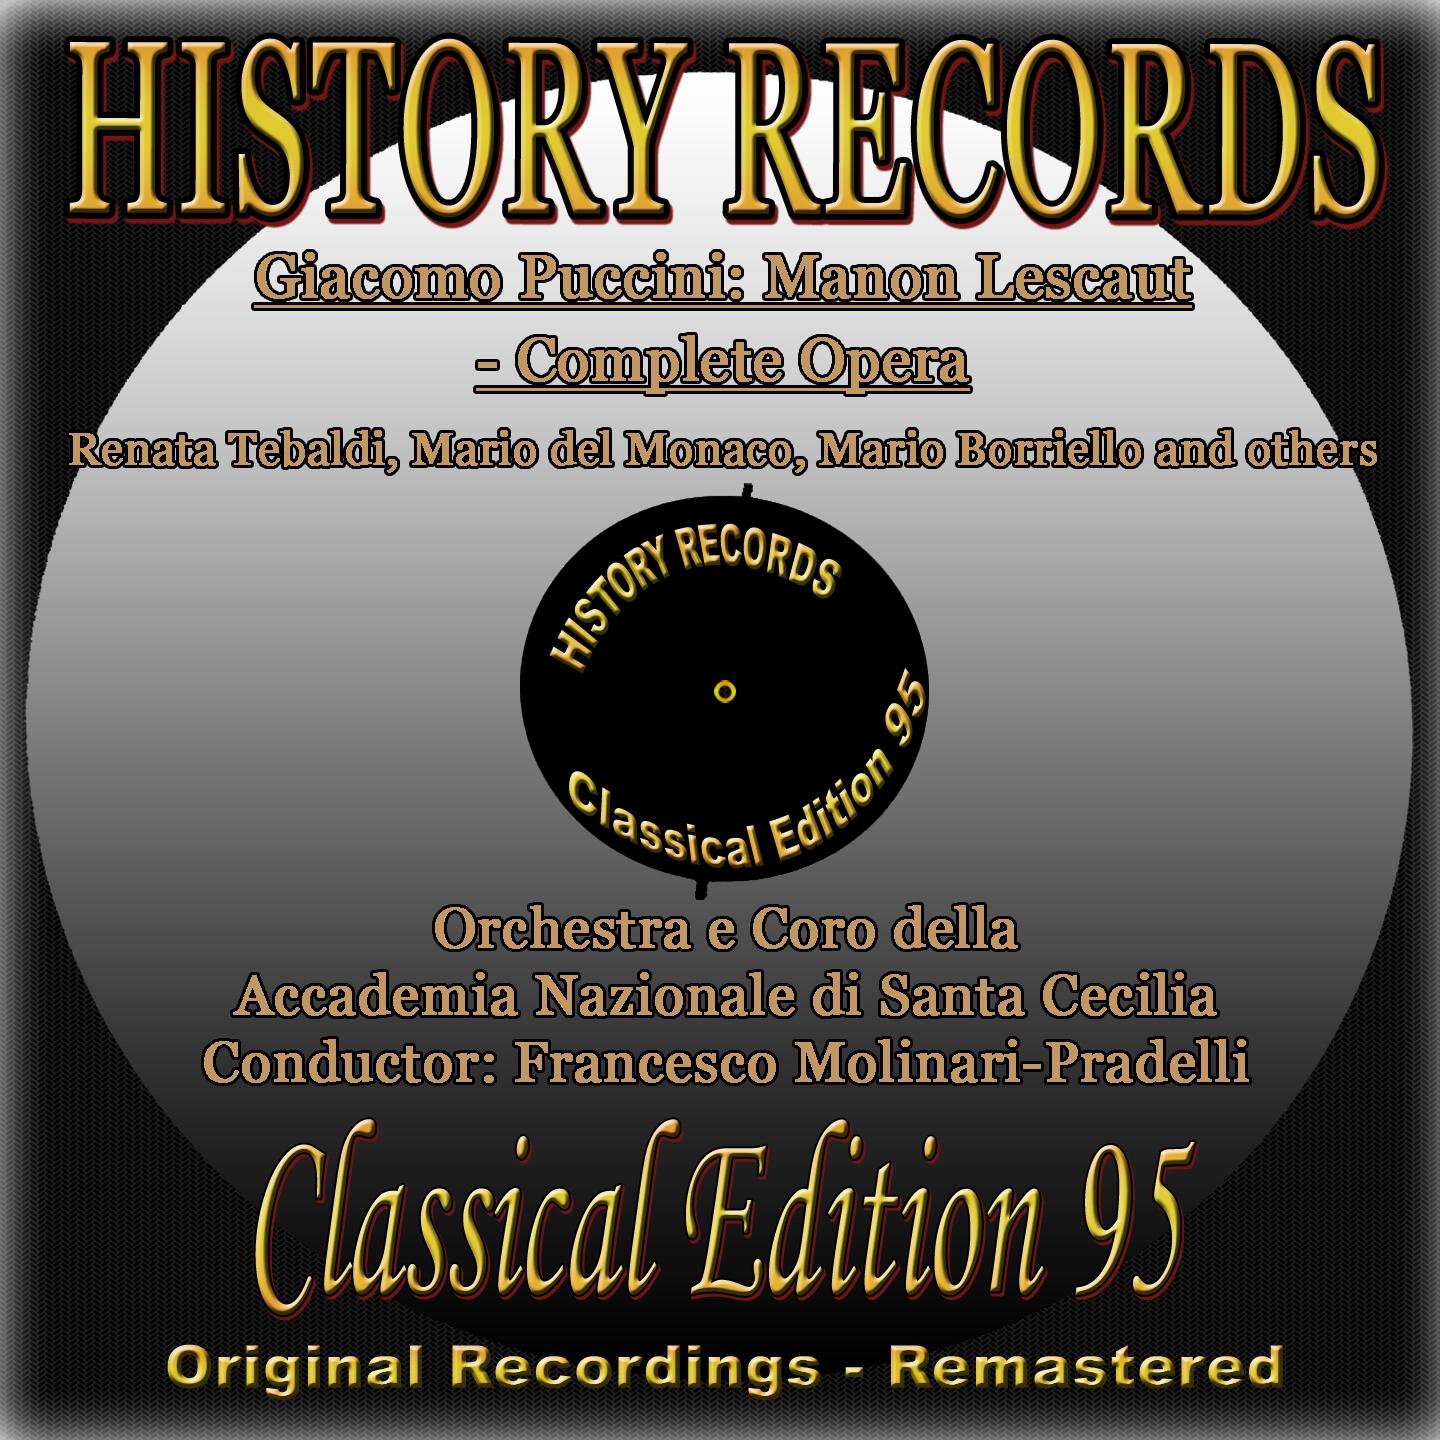 History Records - Classical Edition 95 - Manon Lescaut (Original Recordings - Remastered)